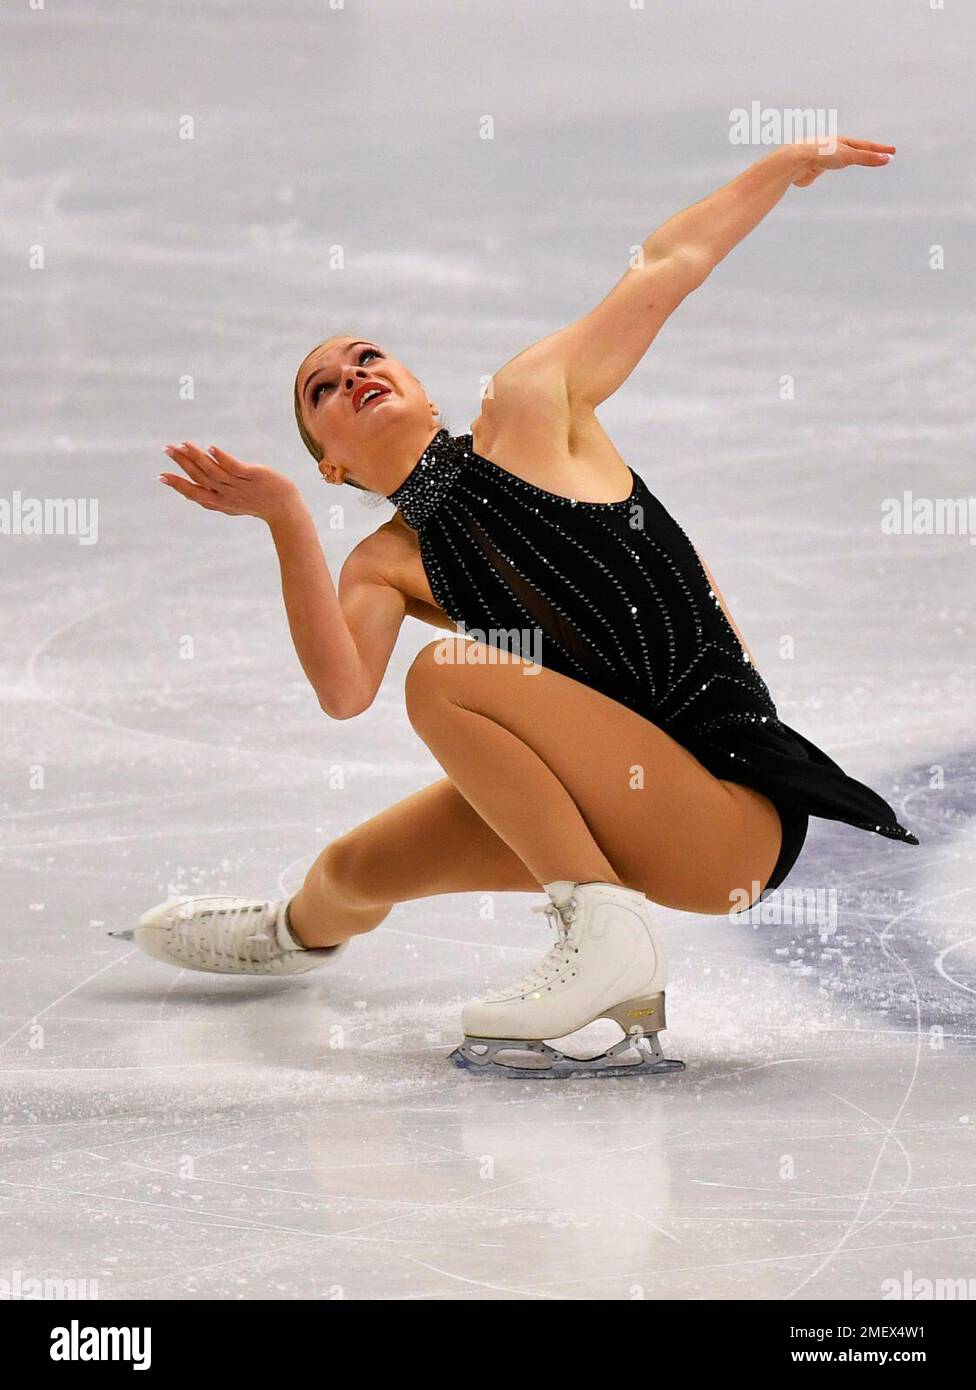 Loena HENDRICKX, Belgique, lors du Ladies Free Skating, au Grand Prix de  patinage artistique de l'UIP - Gran Premio d'Italia, à Palavela, le 6  novembre 2021 à Turin, Italie.Credit: Raniero Corbelletti/AFLO/Alay Live